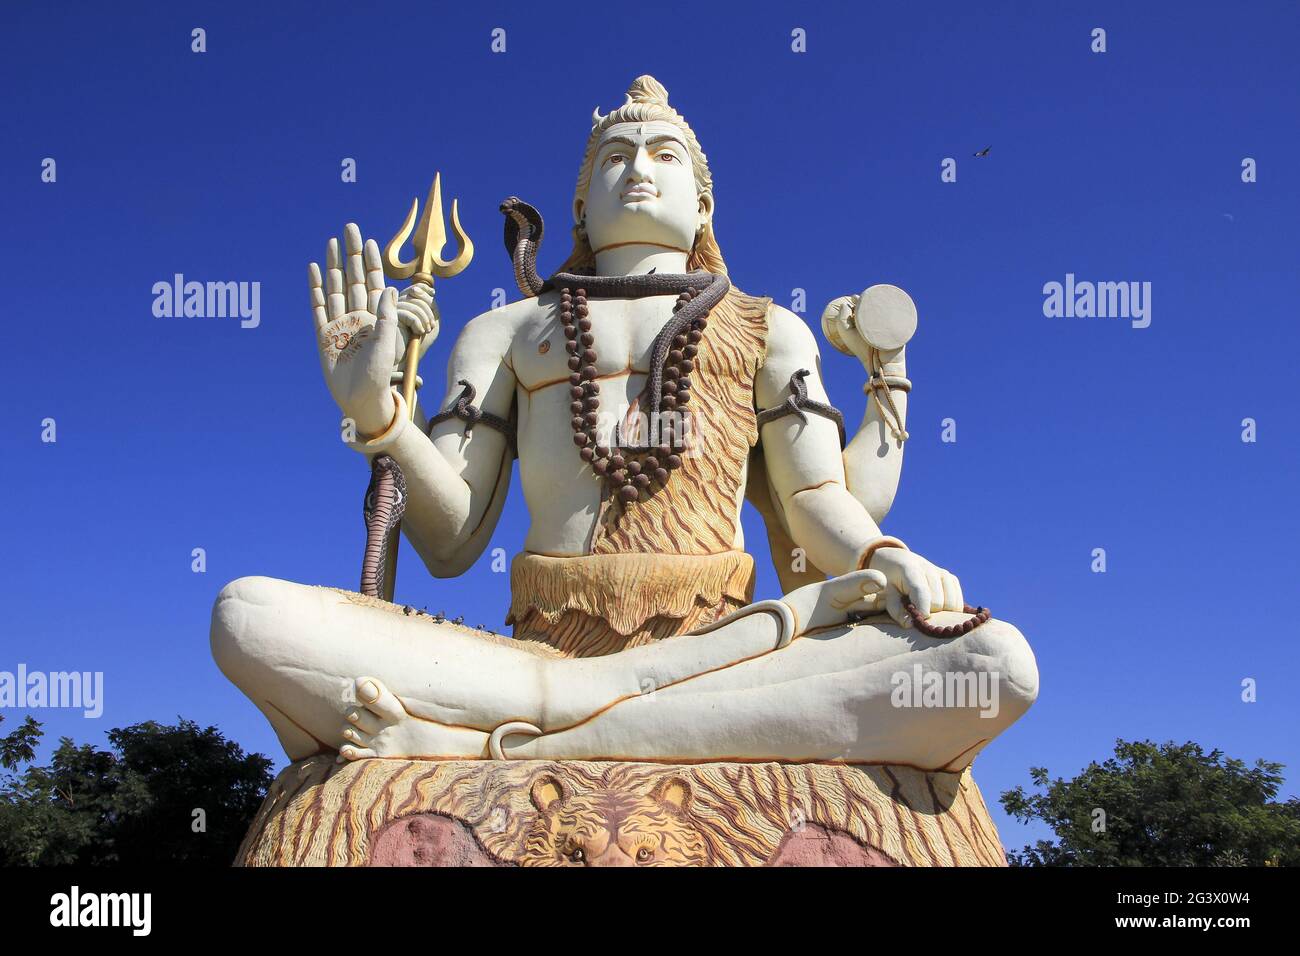 Did Lord Shiva always meditate in yogic asanas (postures)? - Quora